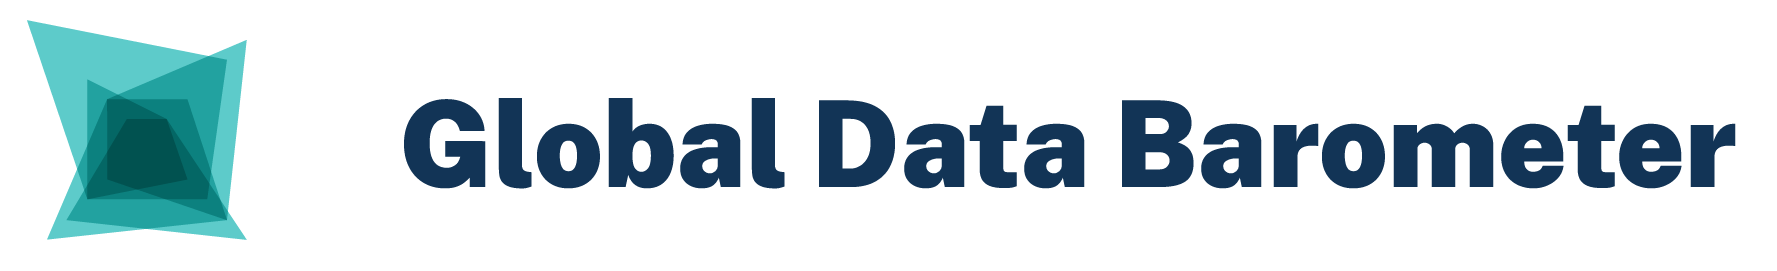 Global Data Barometer Home Page